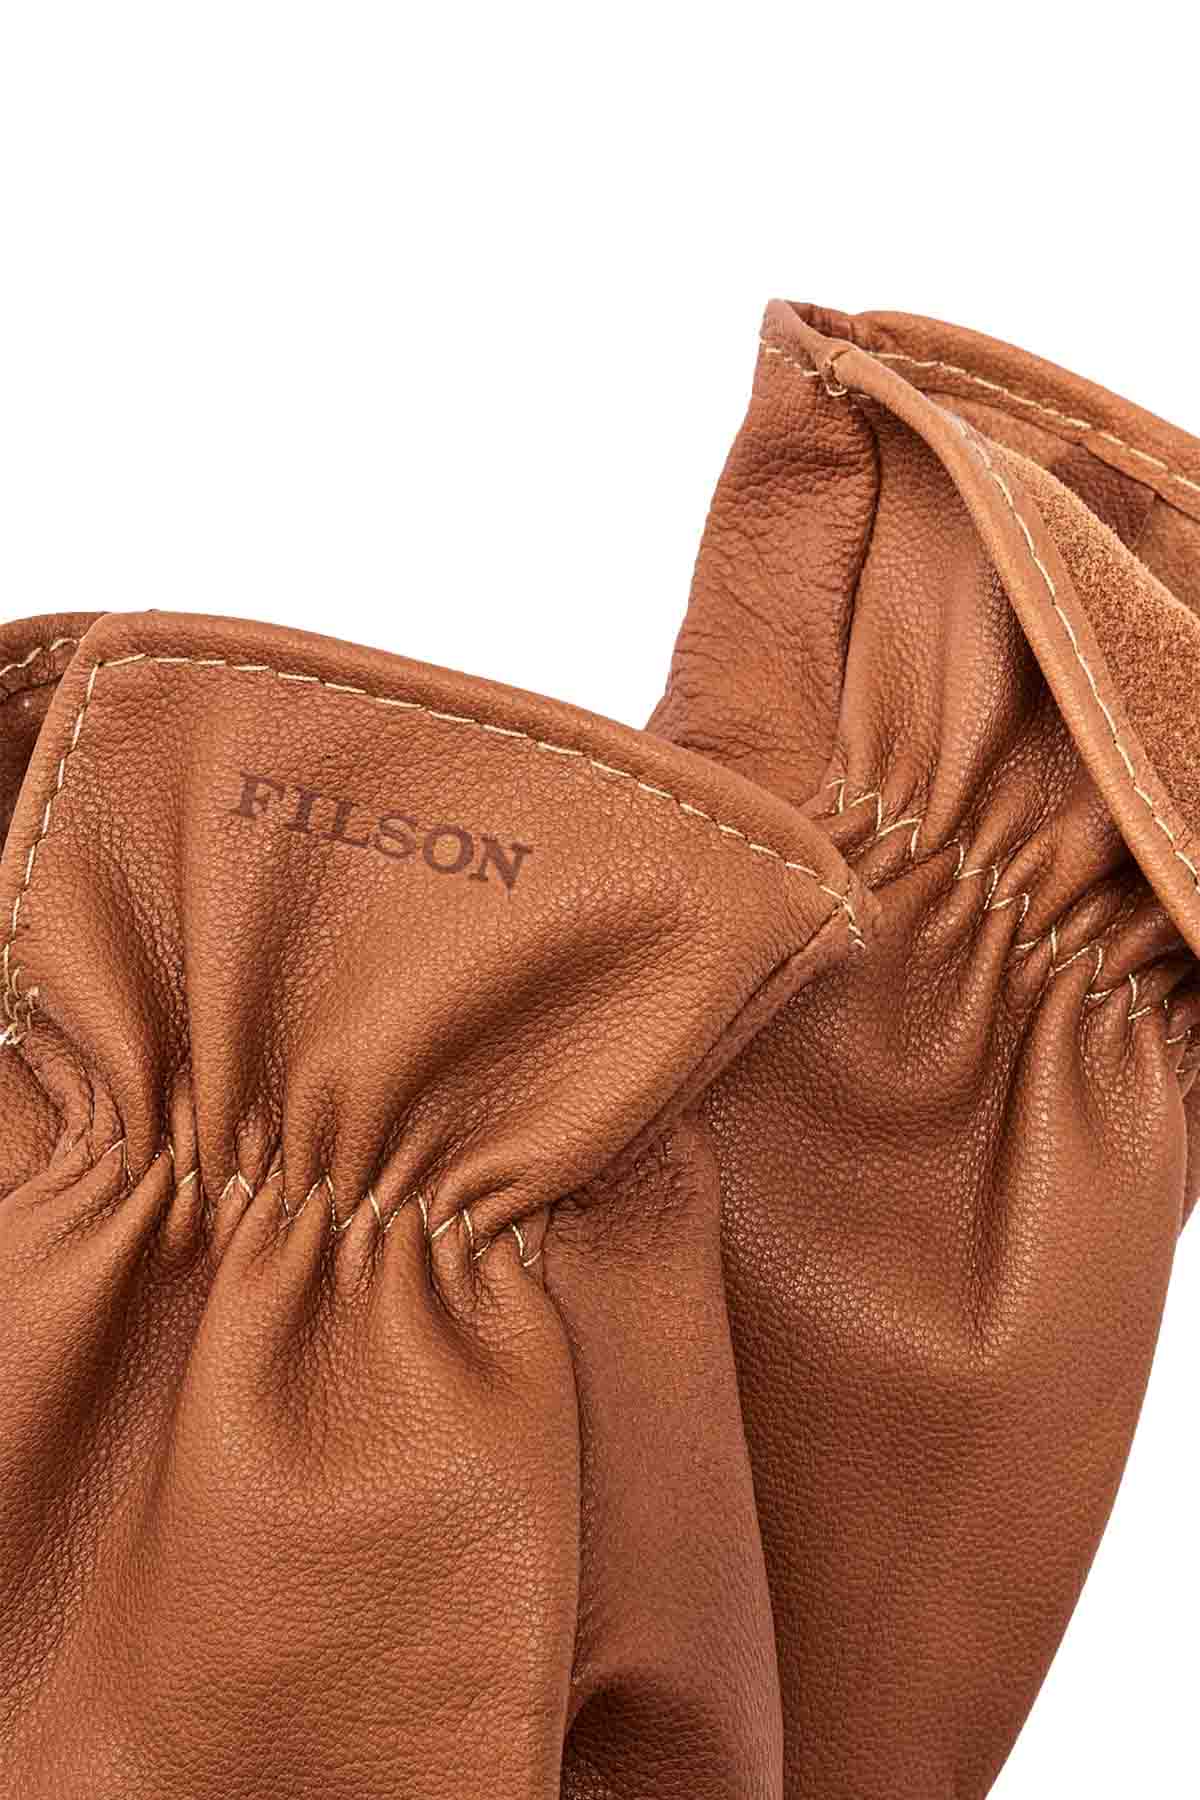 Filson - Original Goatskin Gloves - Saddle Brown - Detail